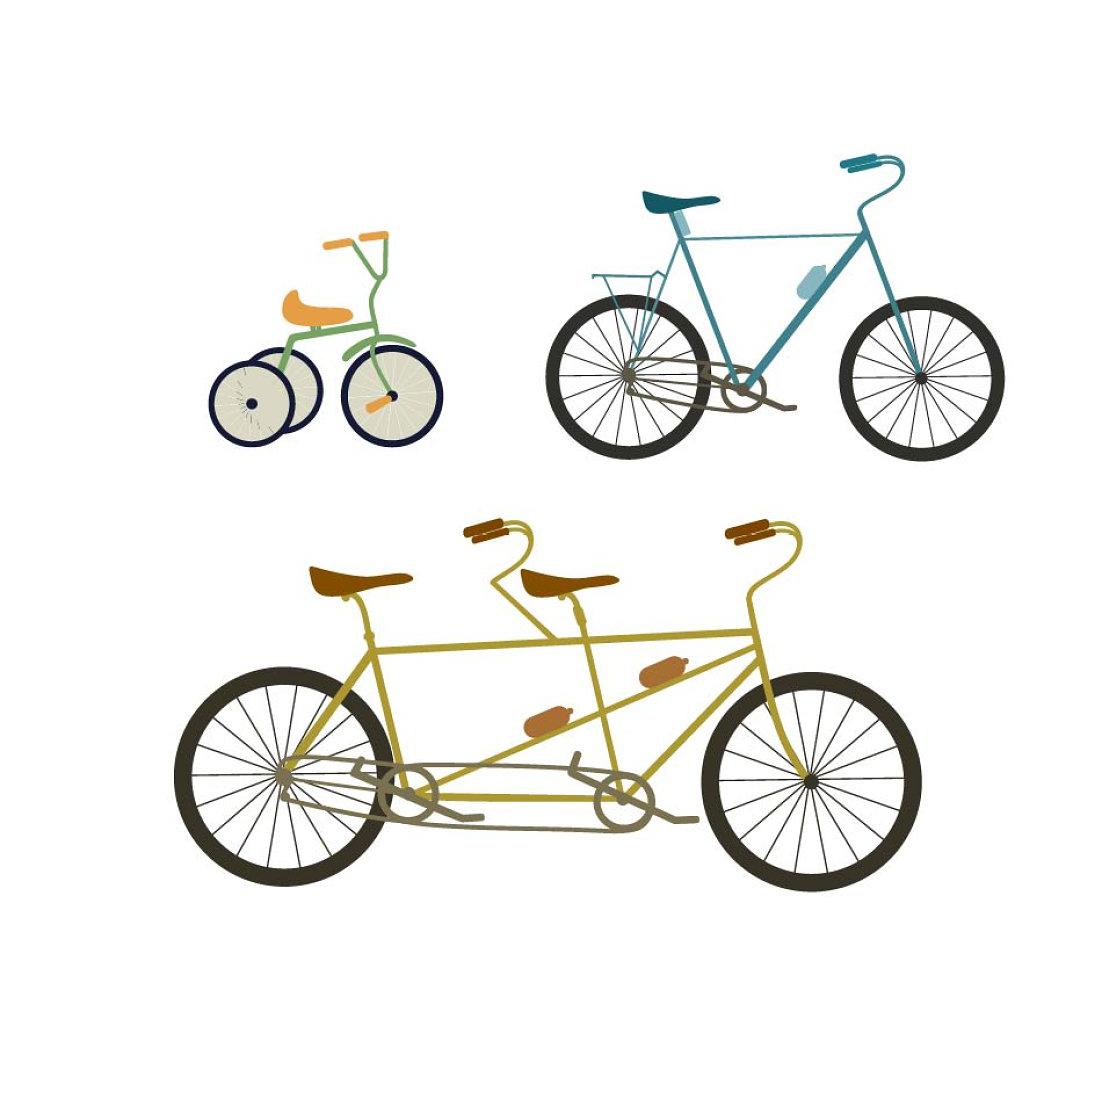 Bicycle, tandem bike vector set.